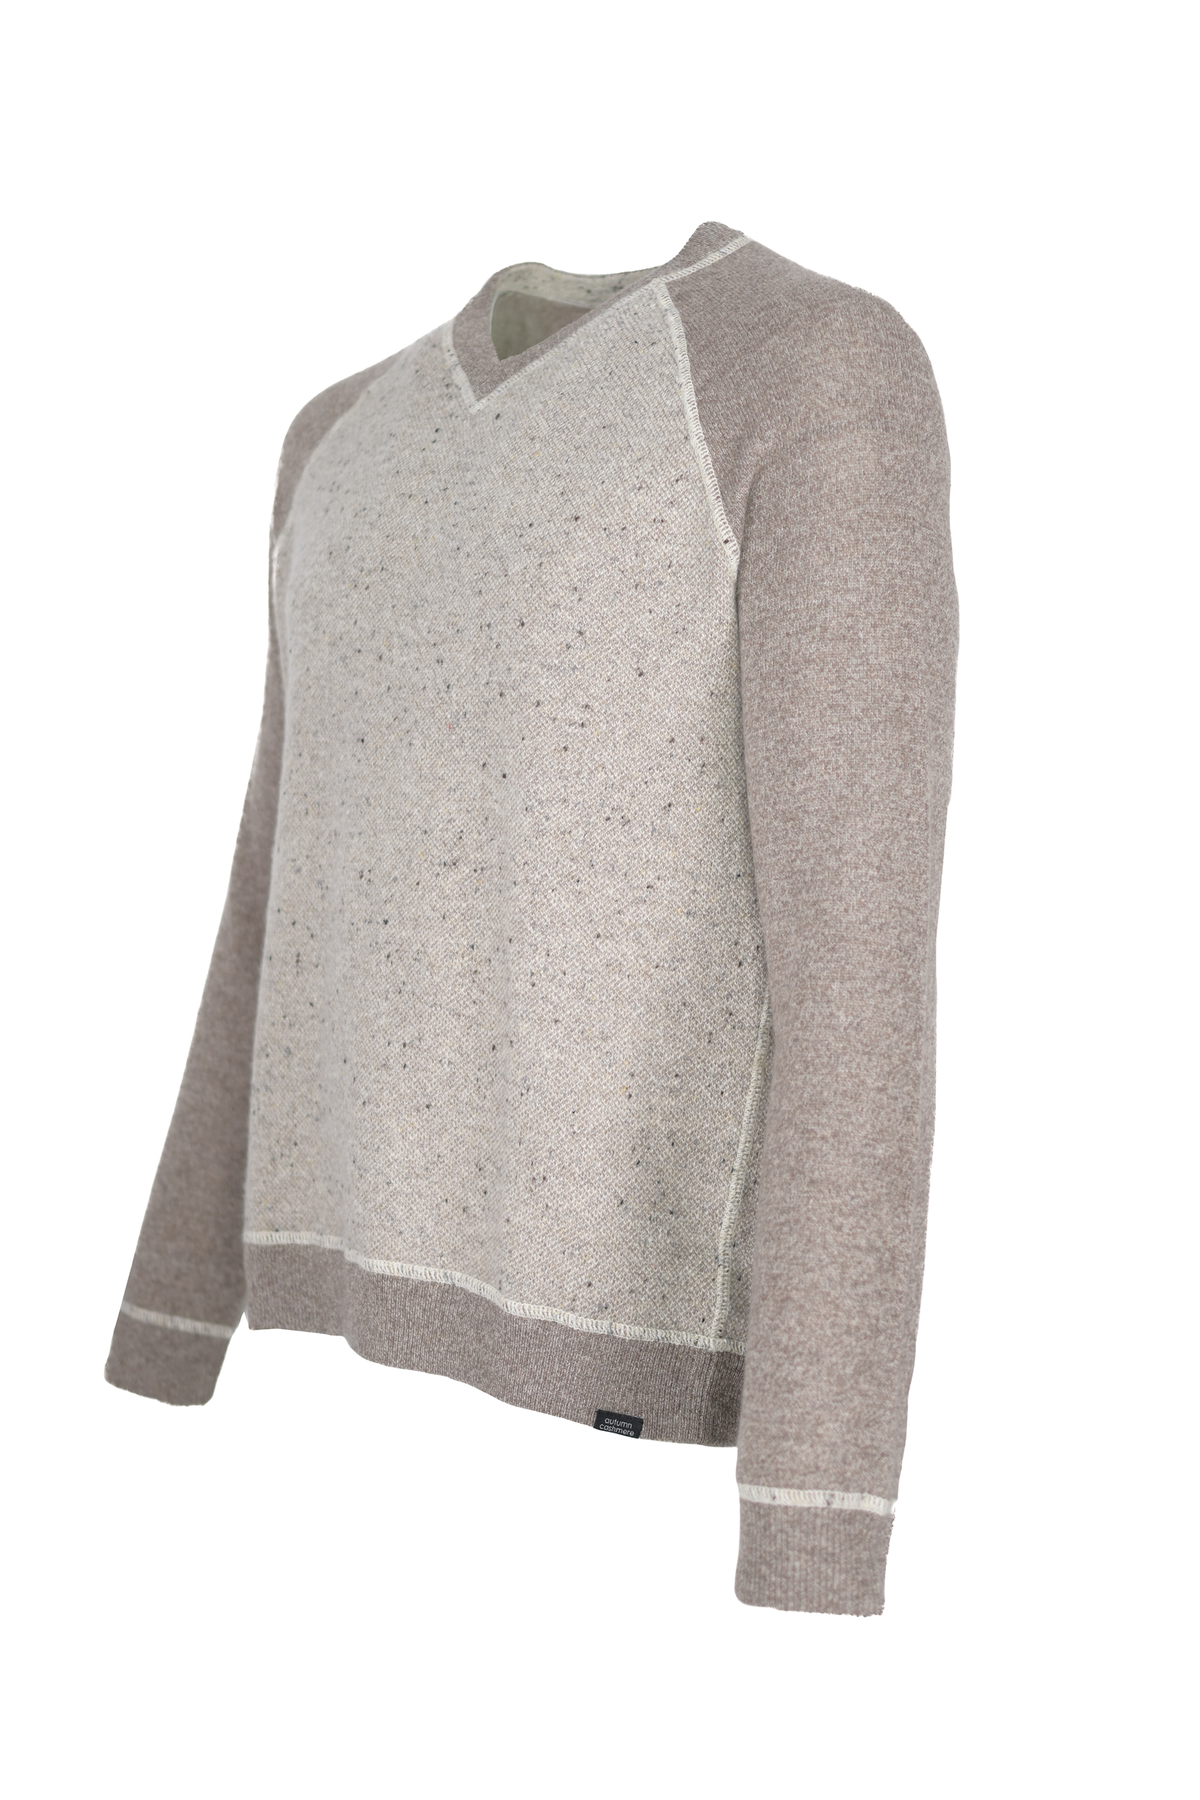 Autumn Cashmere V-Neck Sweater